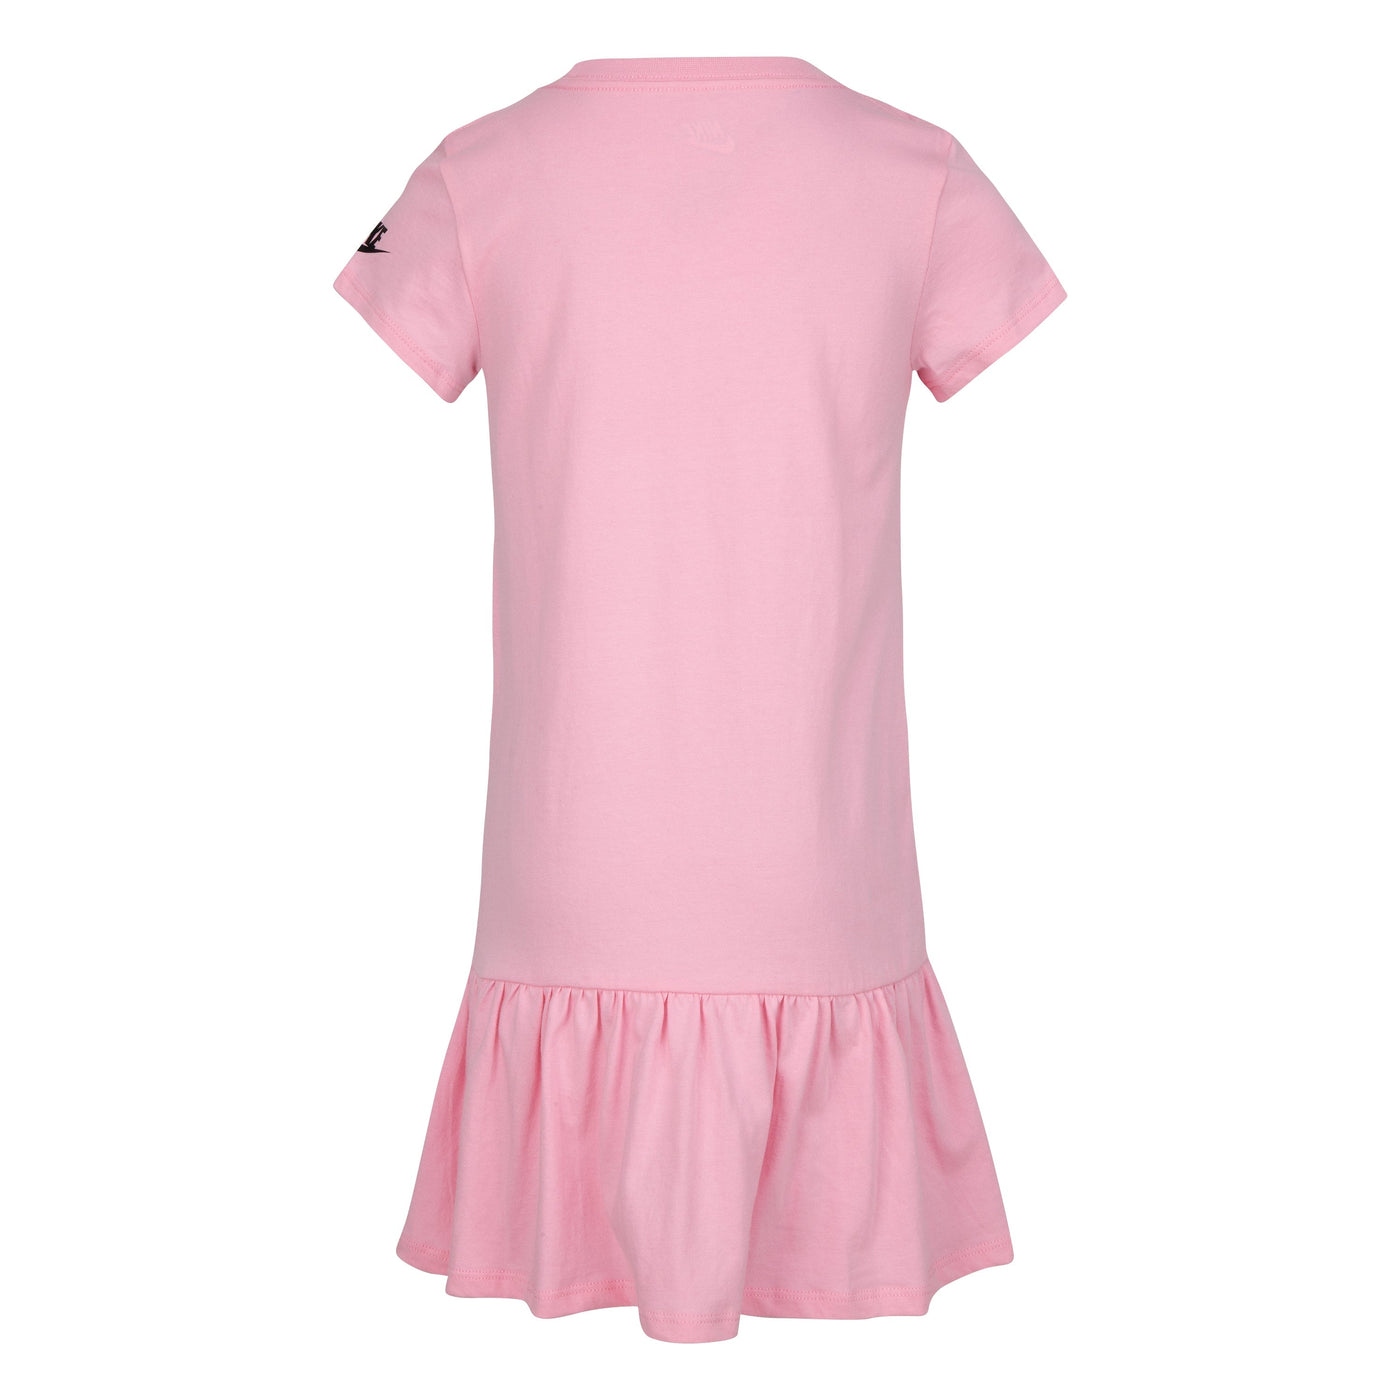 Nike Peplum T-Shirt Dress with Diaper Cover Dress Nike   